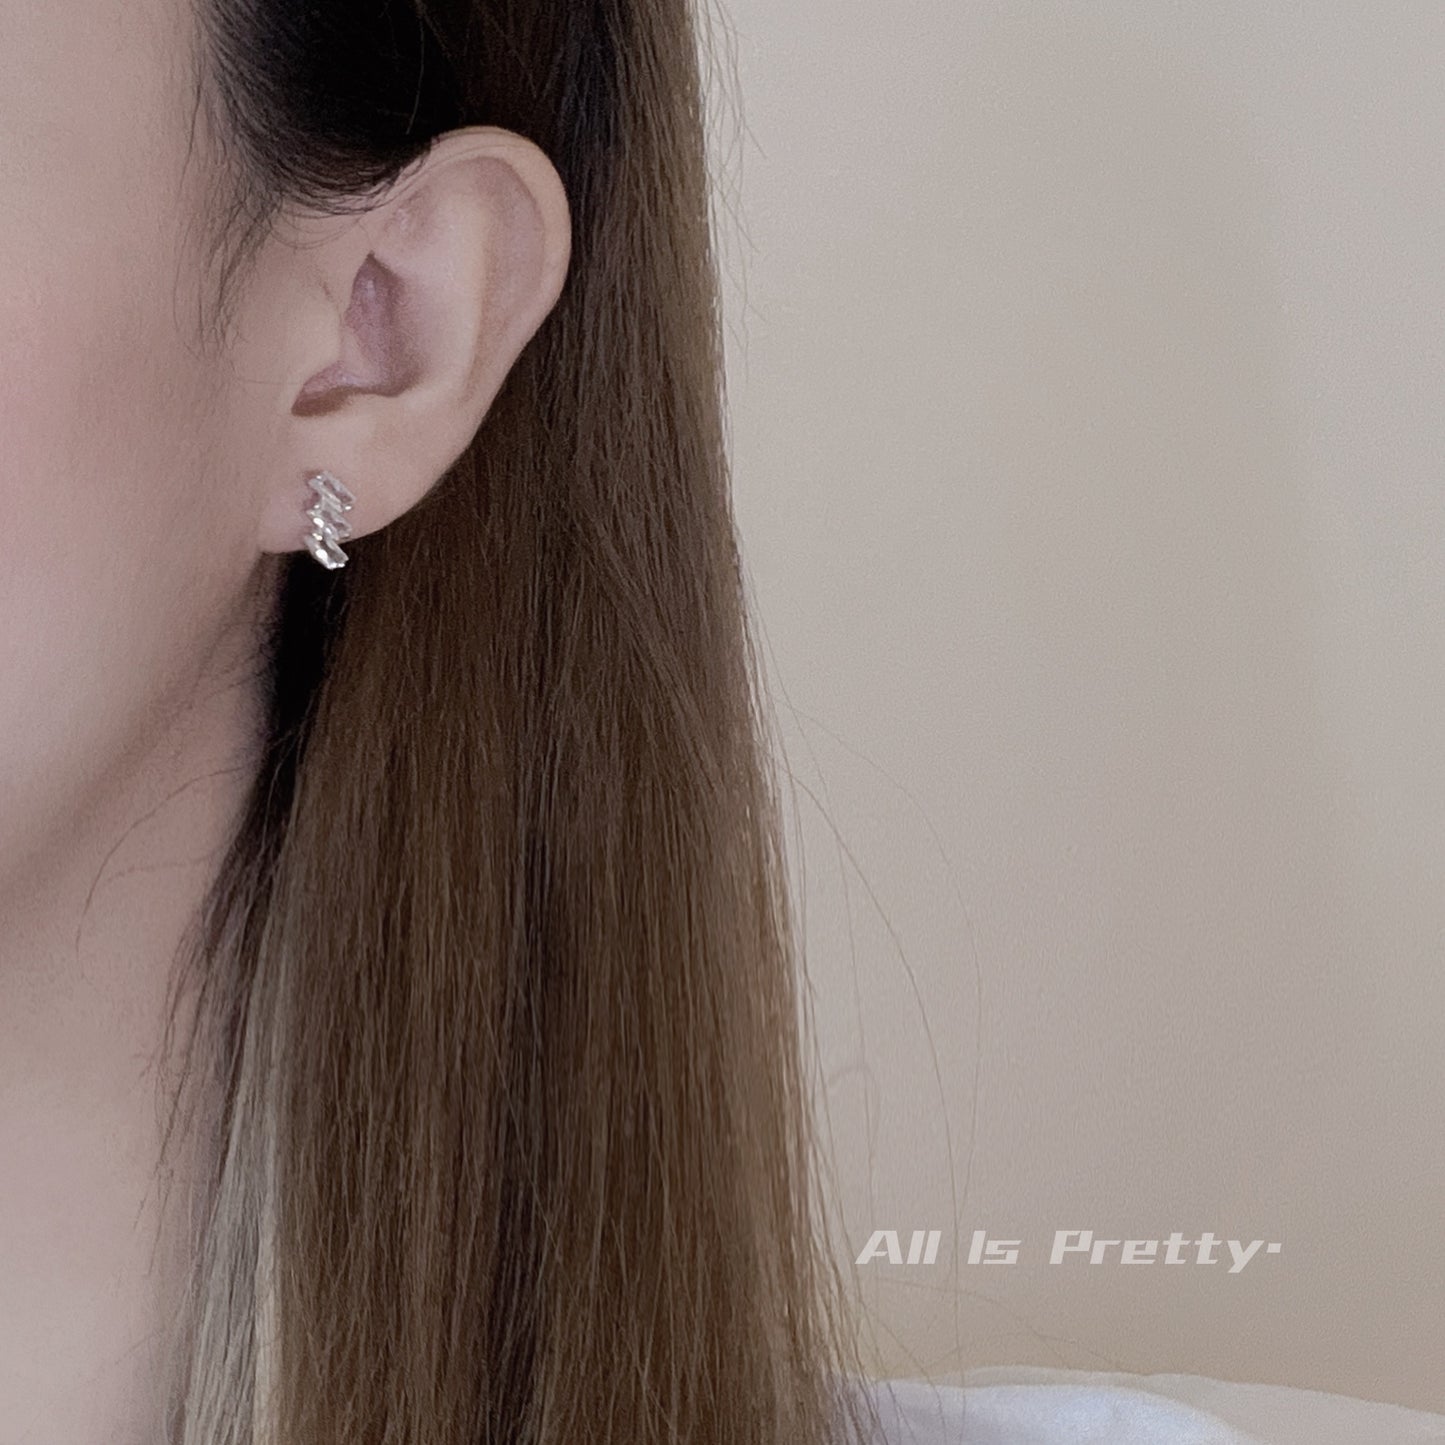 Crystal studded earrings